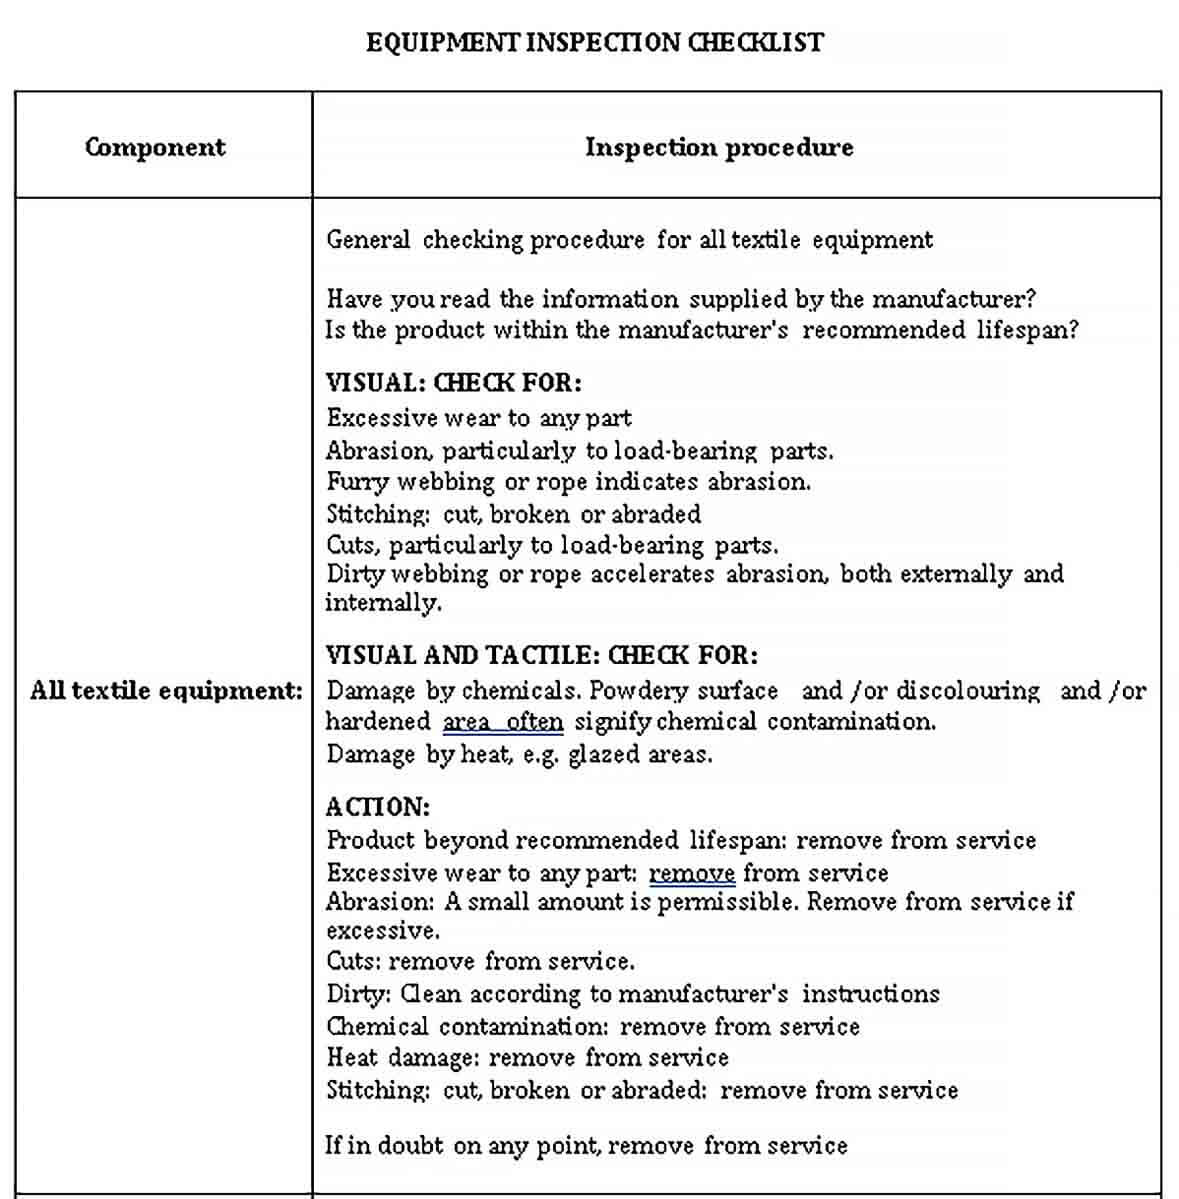 Sample Equipment Inspection Checklist Template